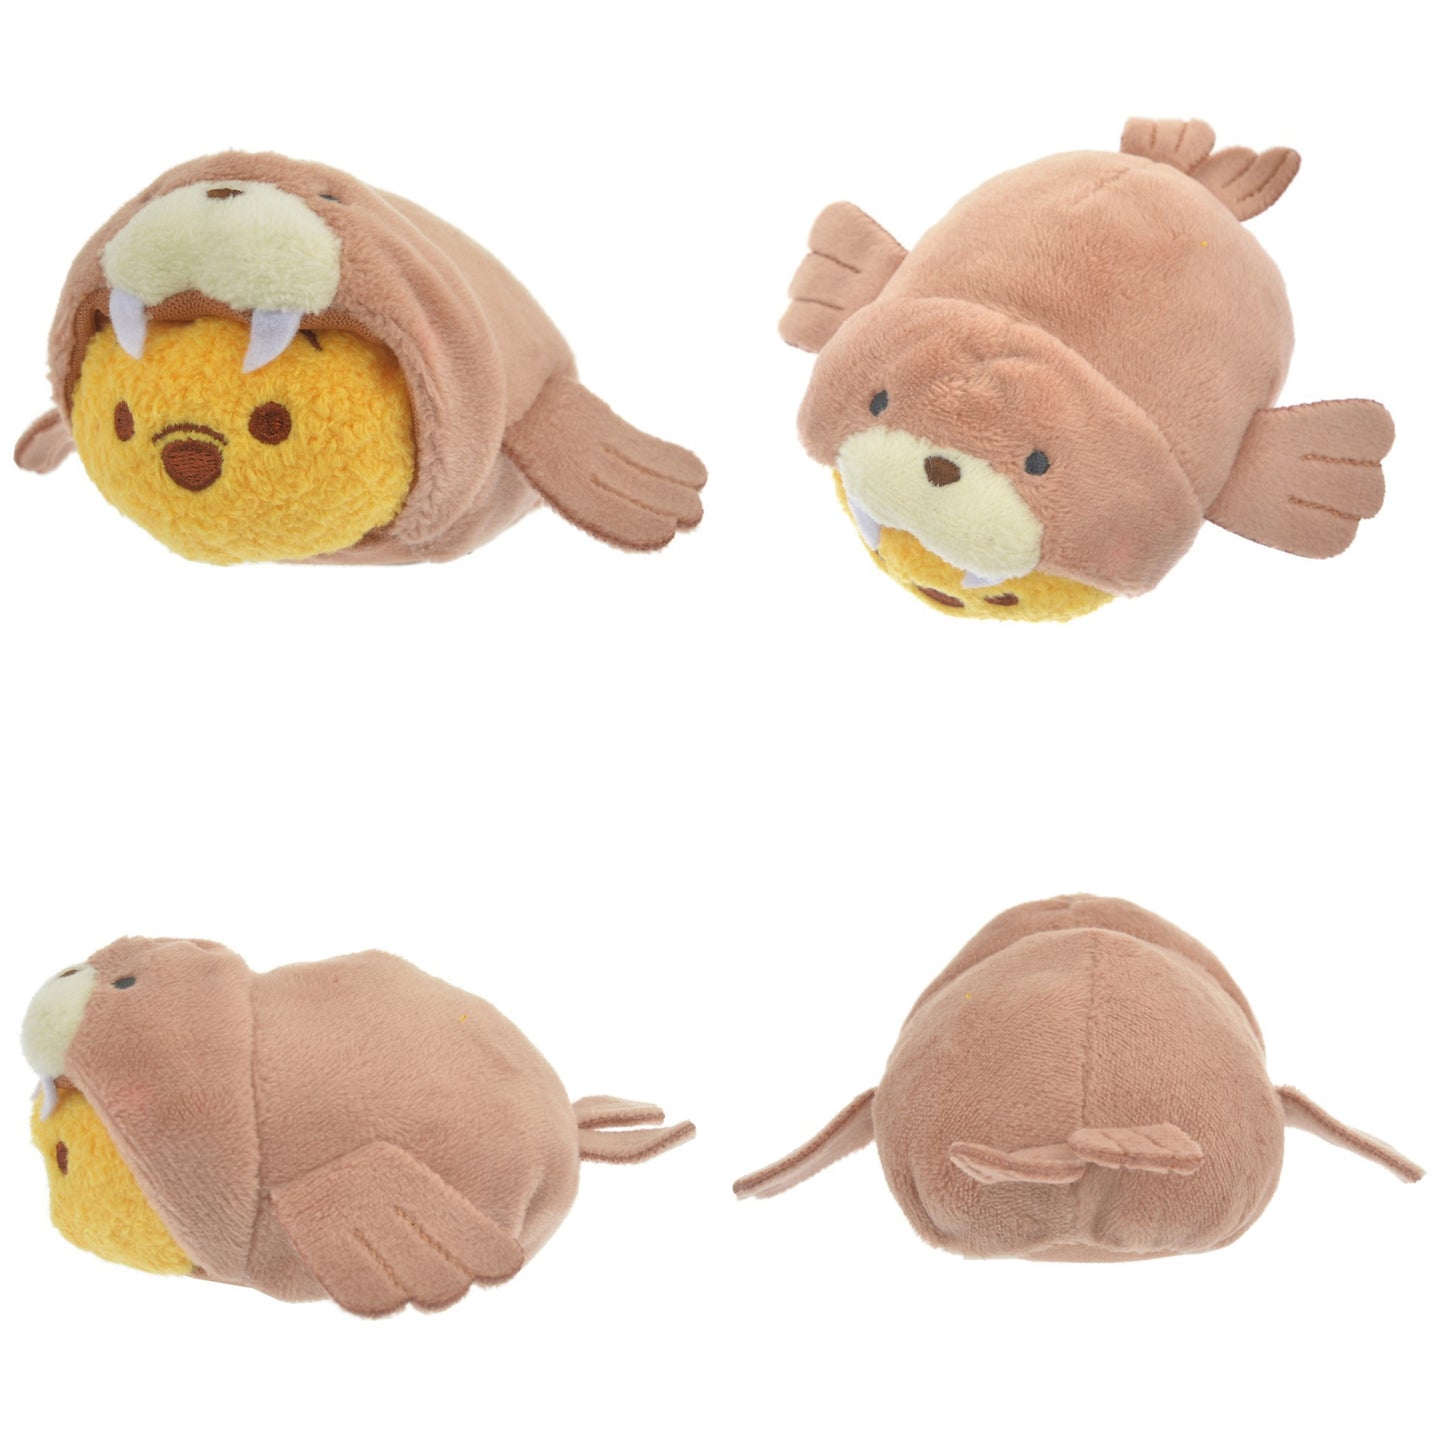 現貨 海洋生物 Tsum Tsum Donald/ Pooh